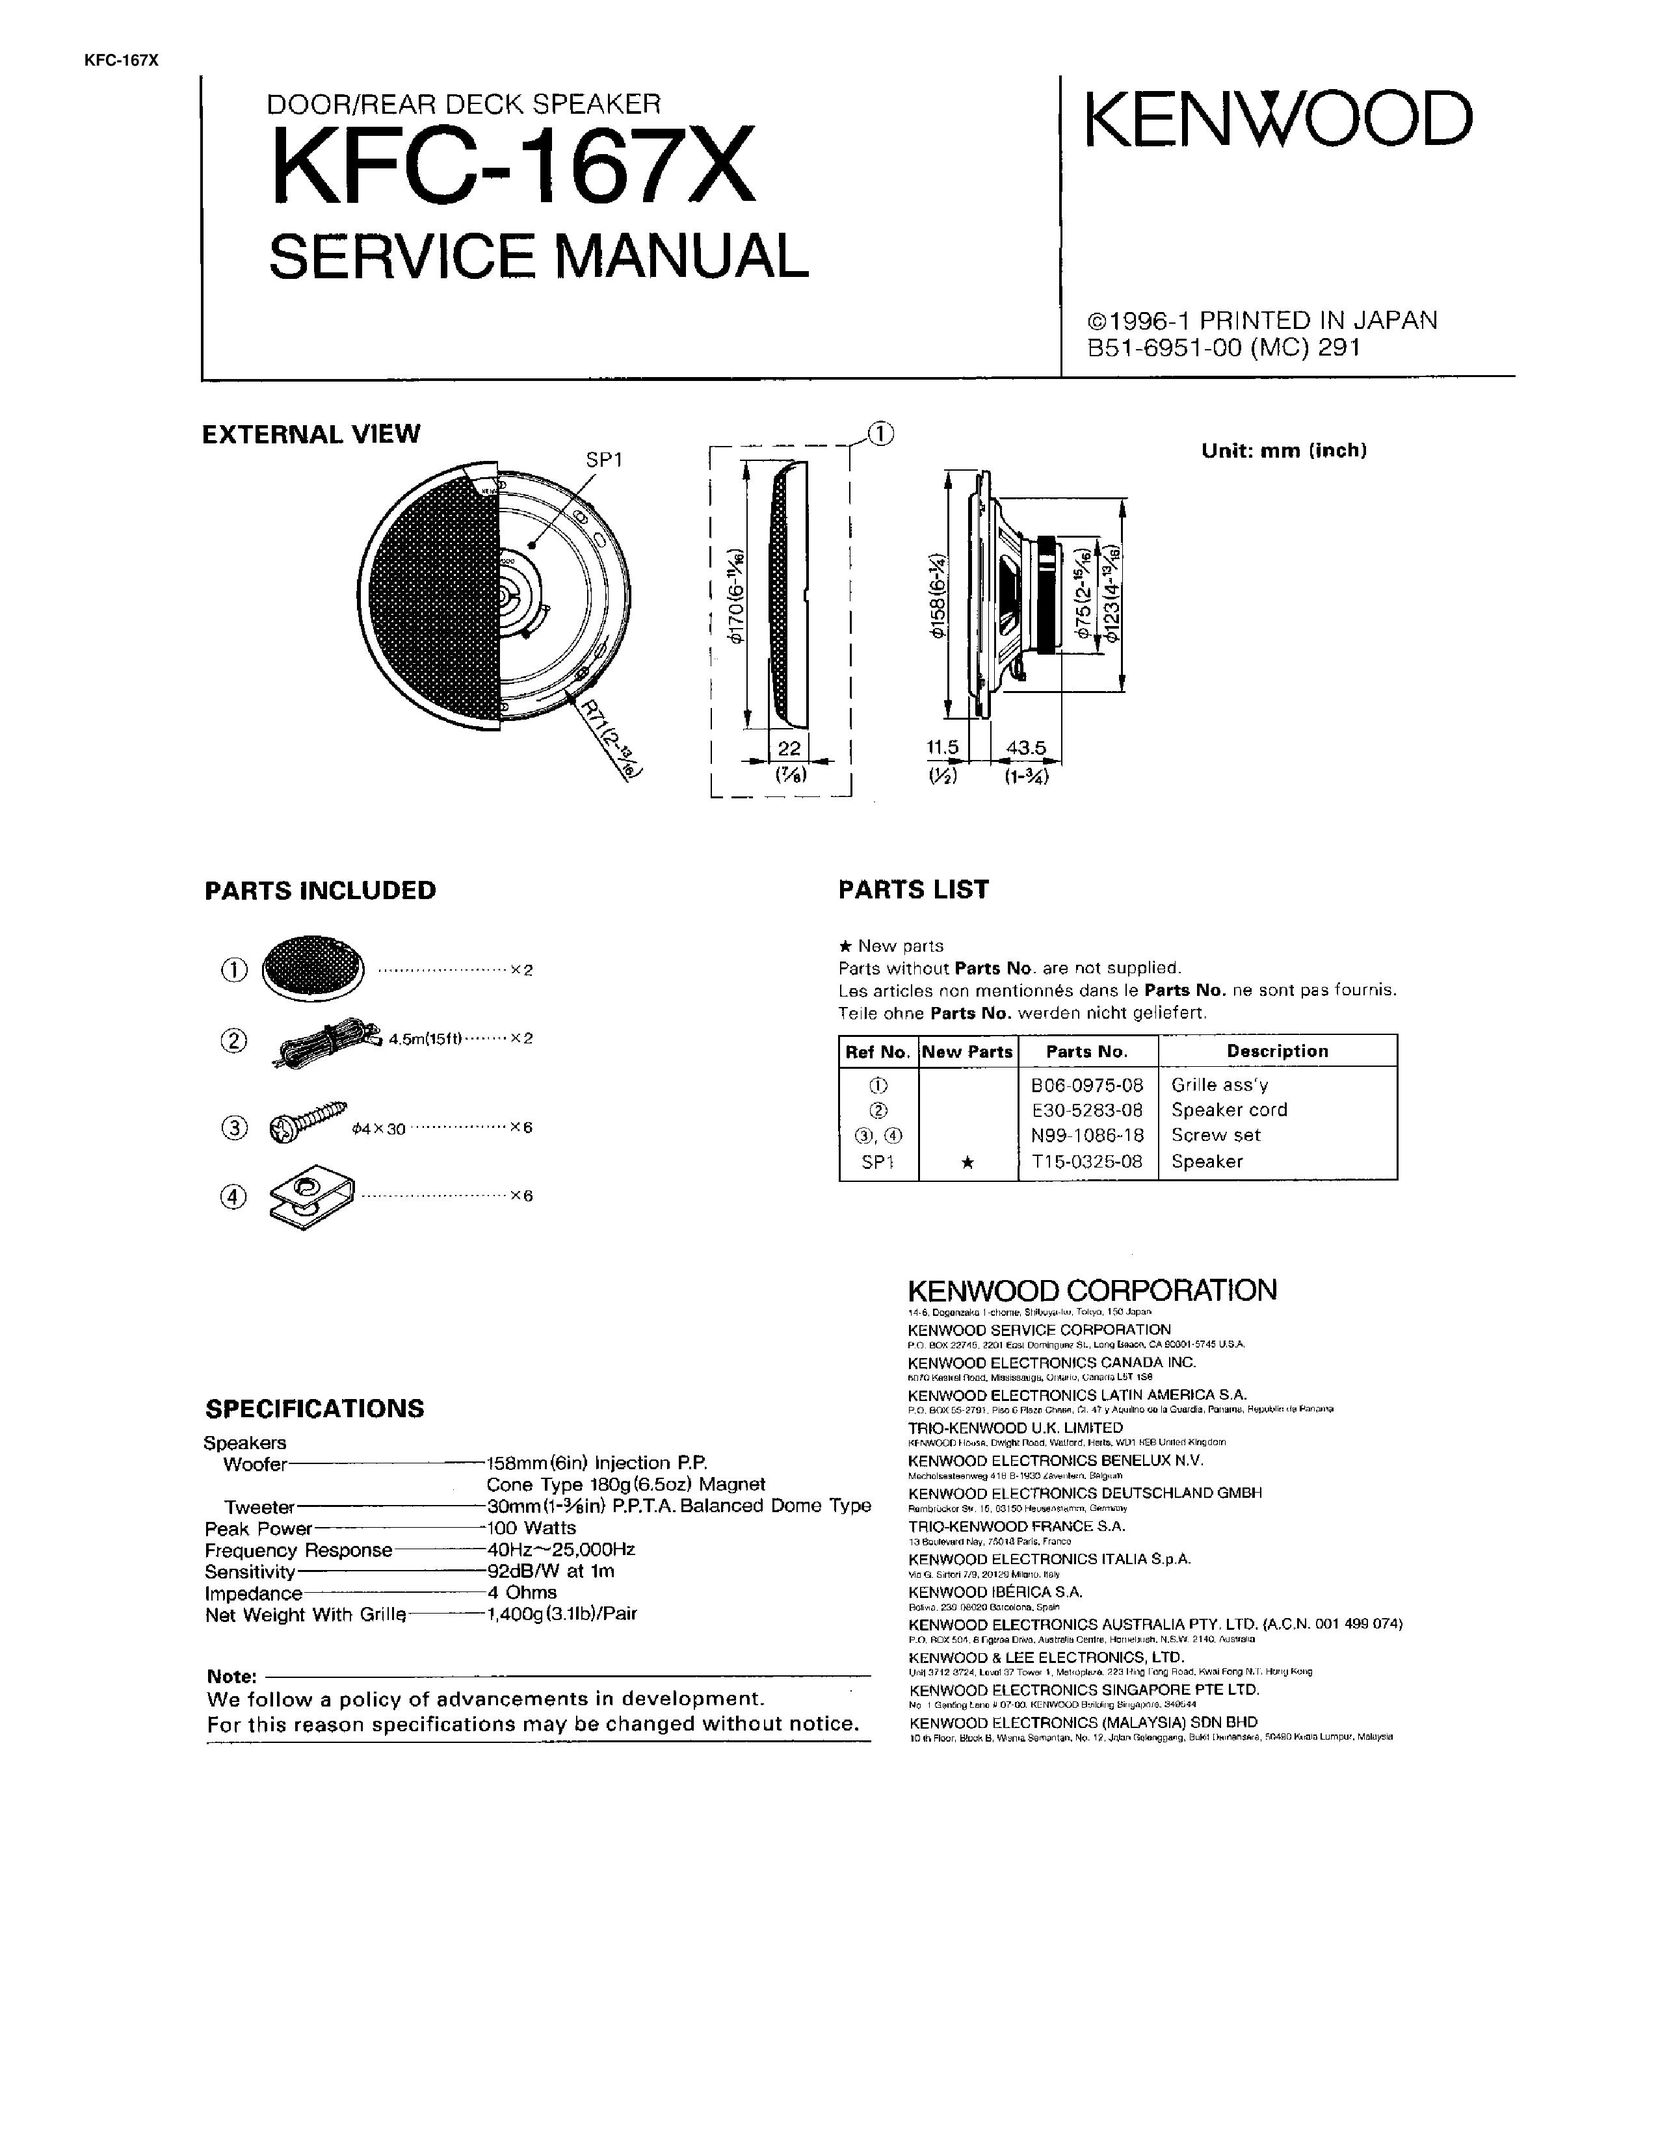 Kenwood KFC-167X Speaker User Manual